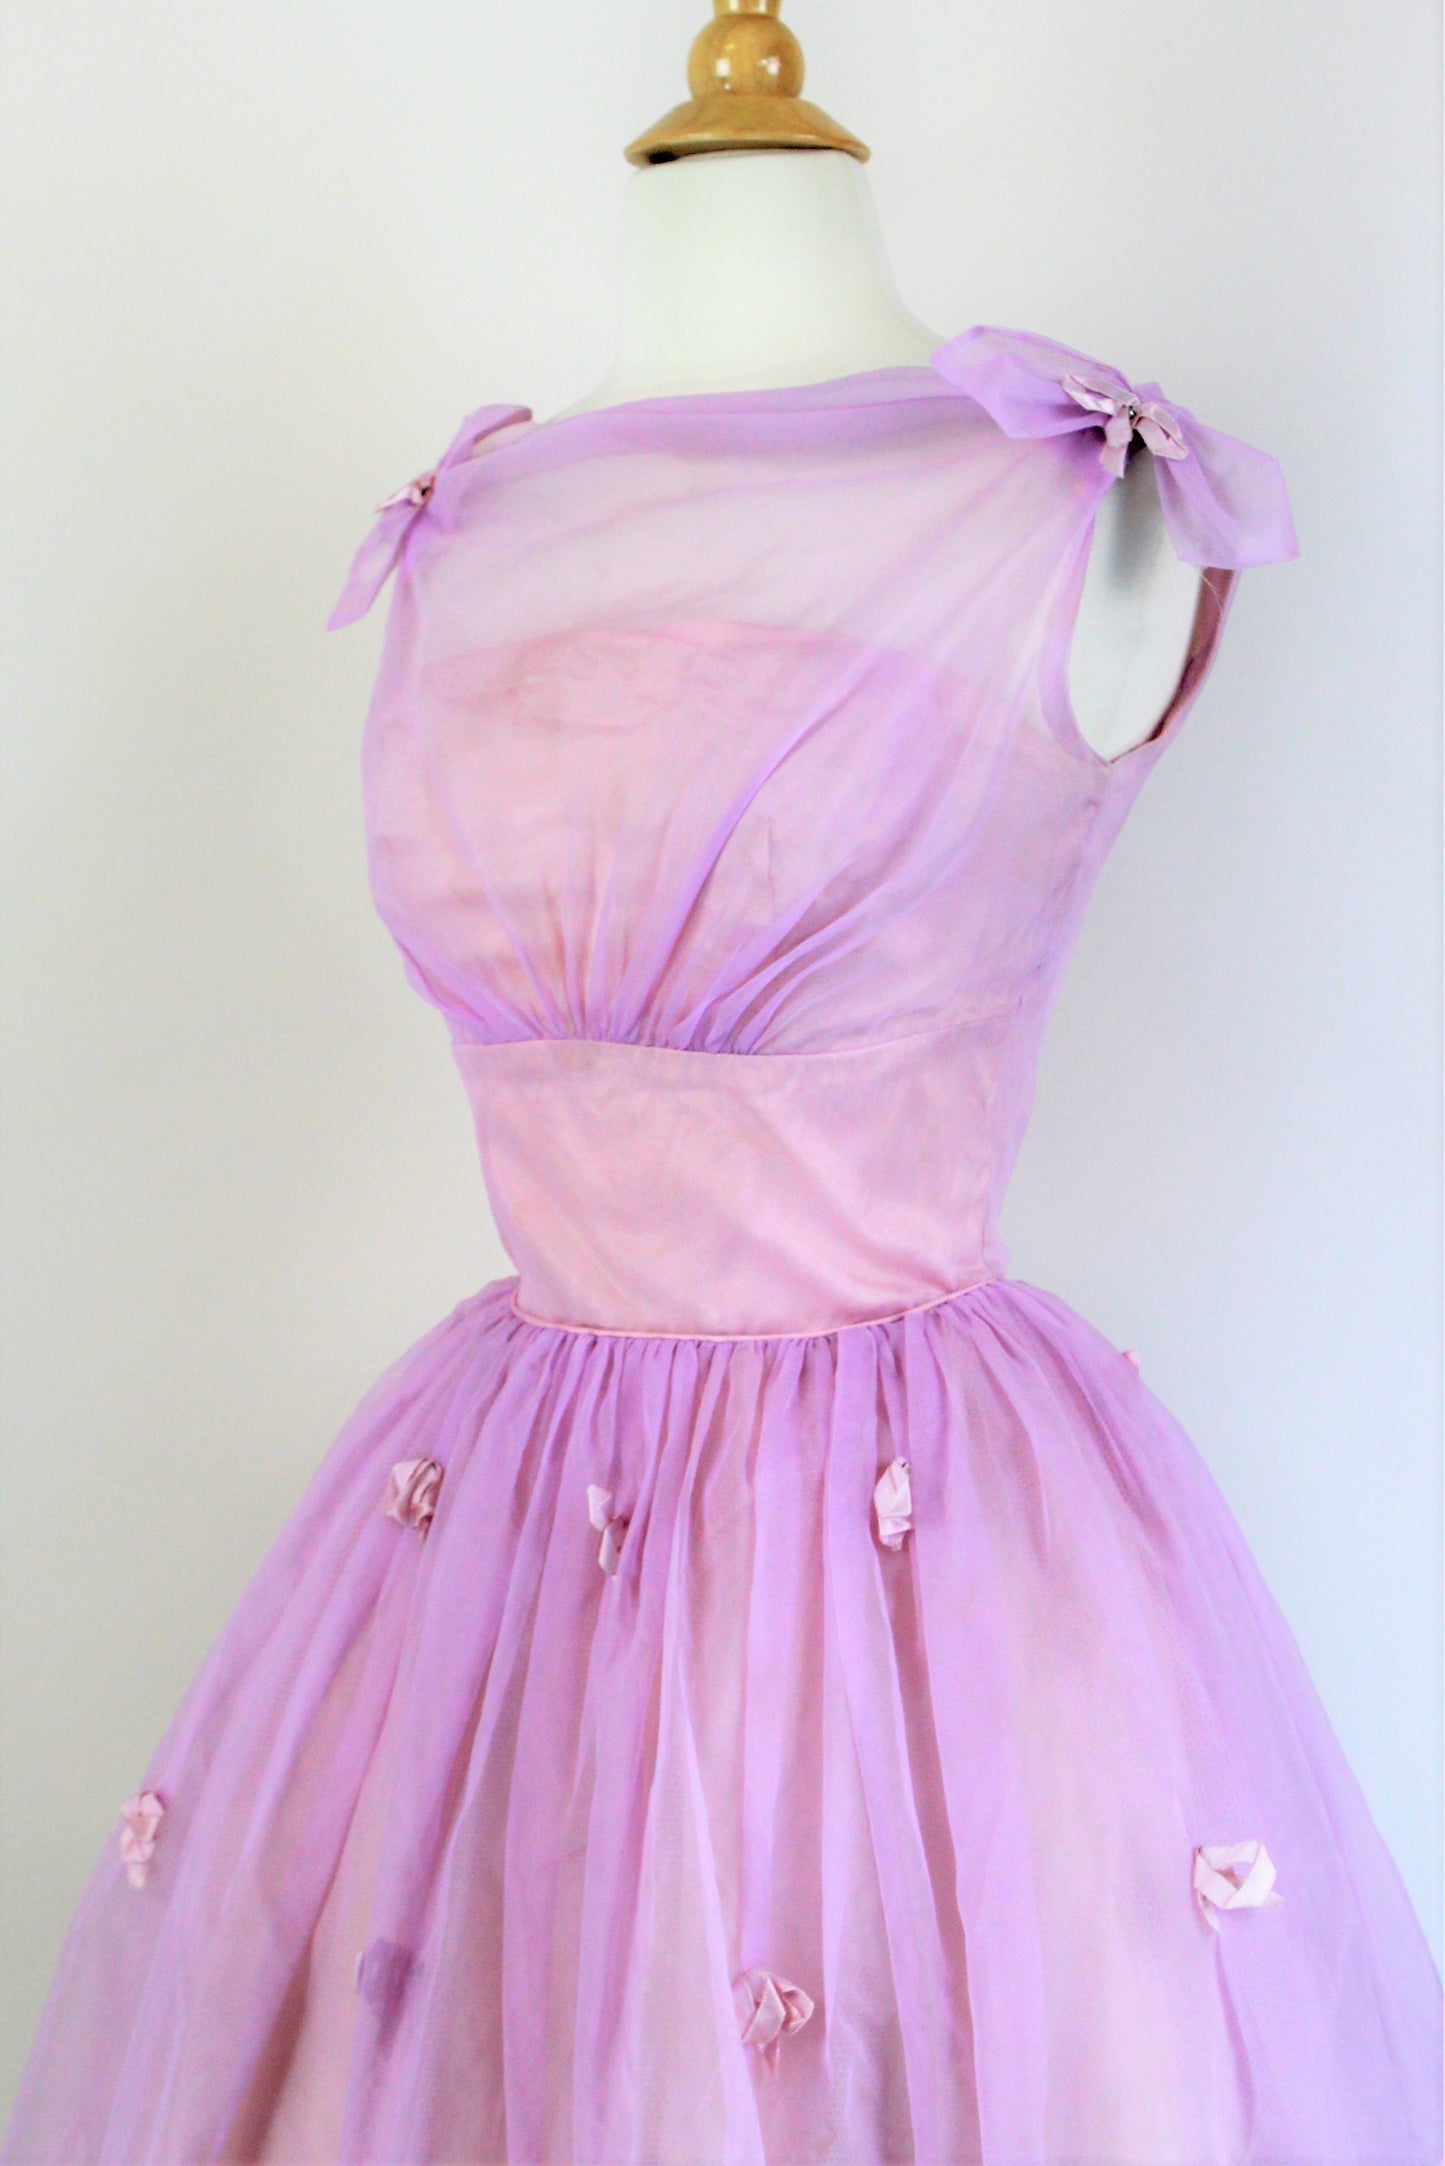 Vintage 1960s Fairytale Dream Dress in Lavender Pink, by Aldens